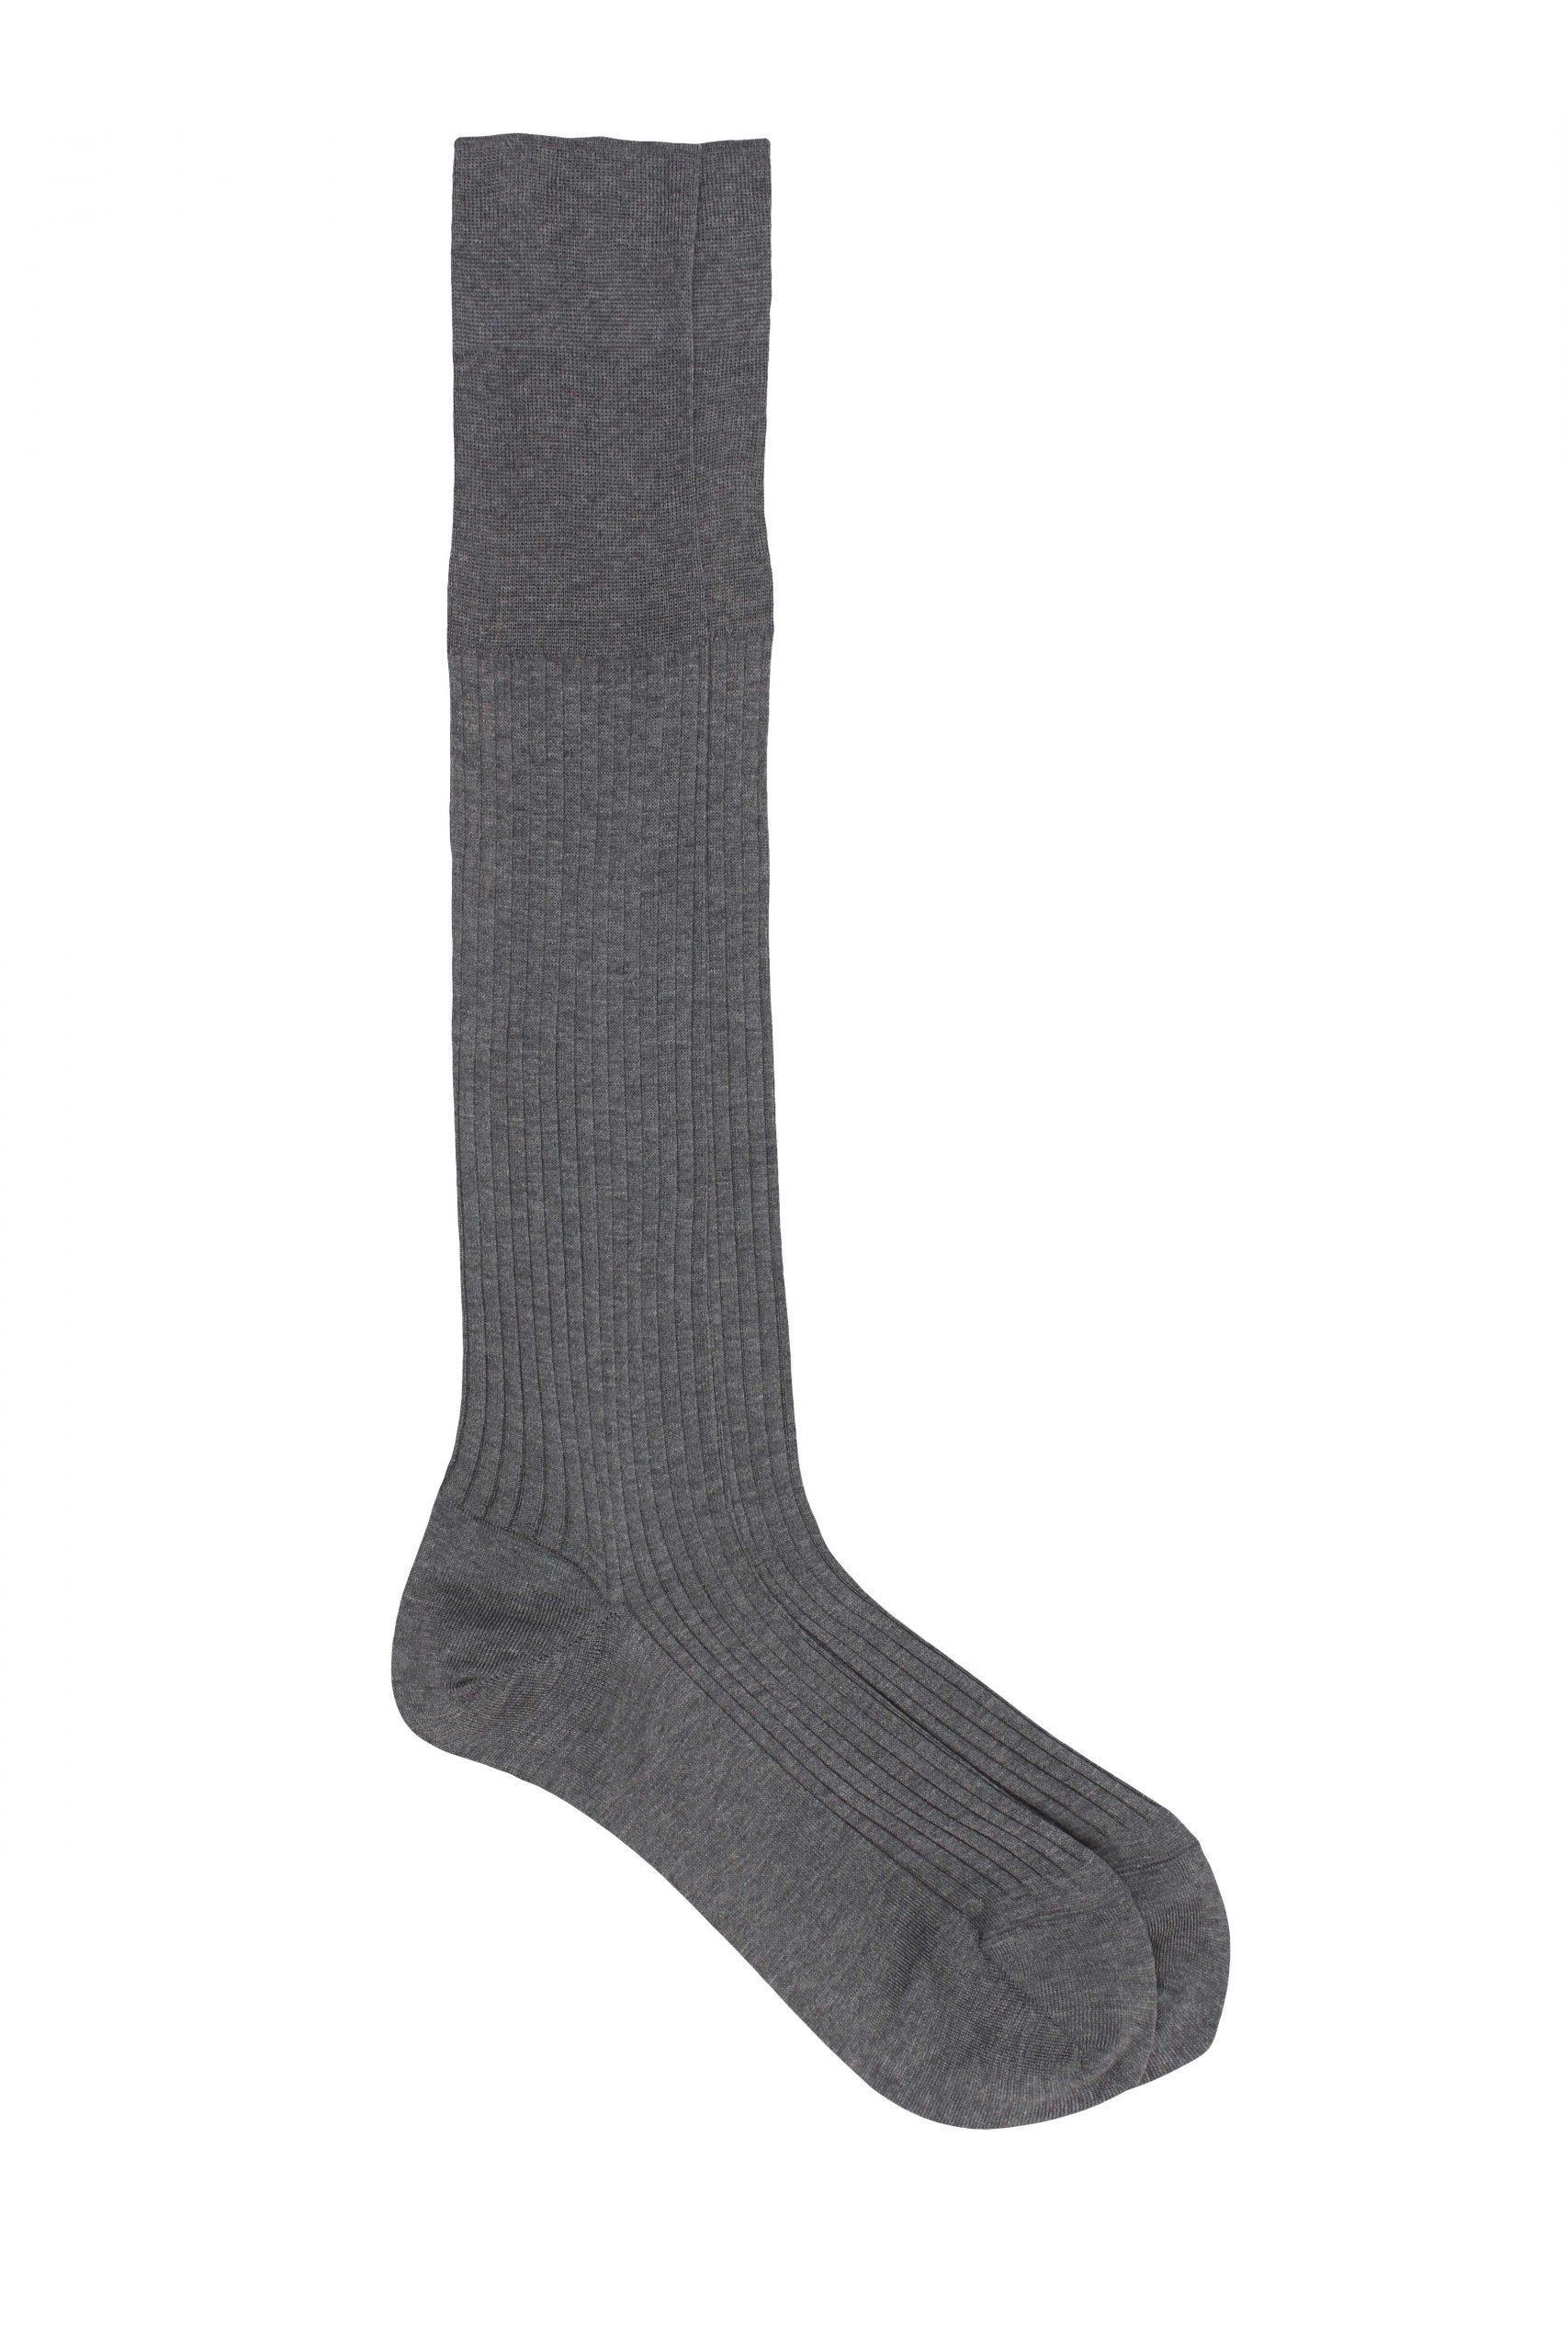 Men's knee socks in 100% mercerized cotton